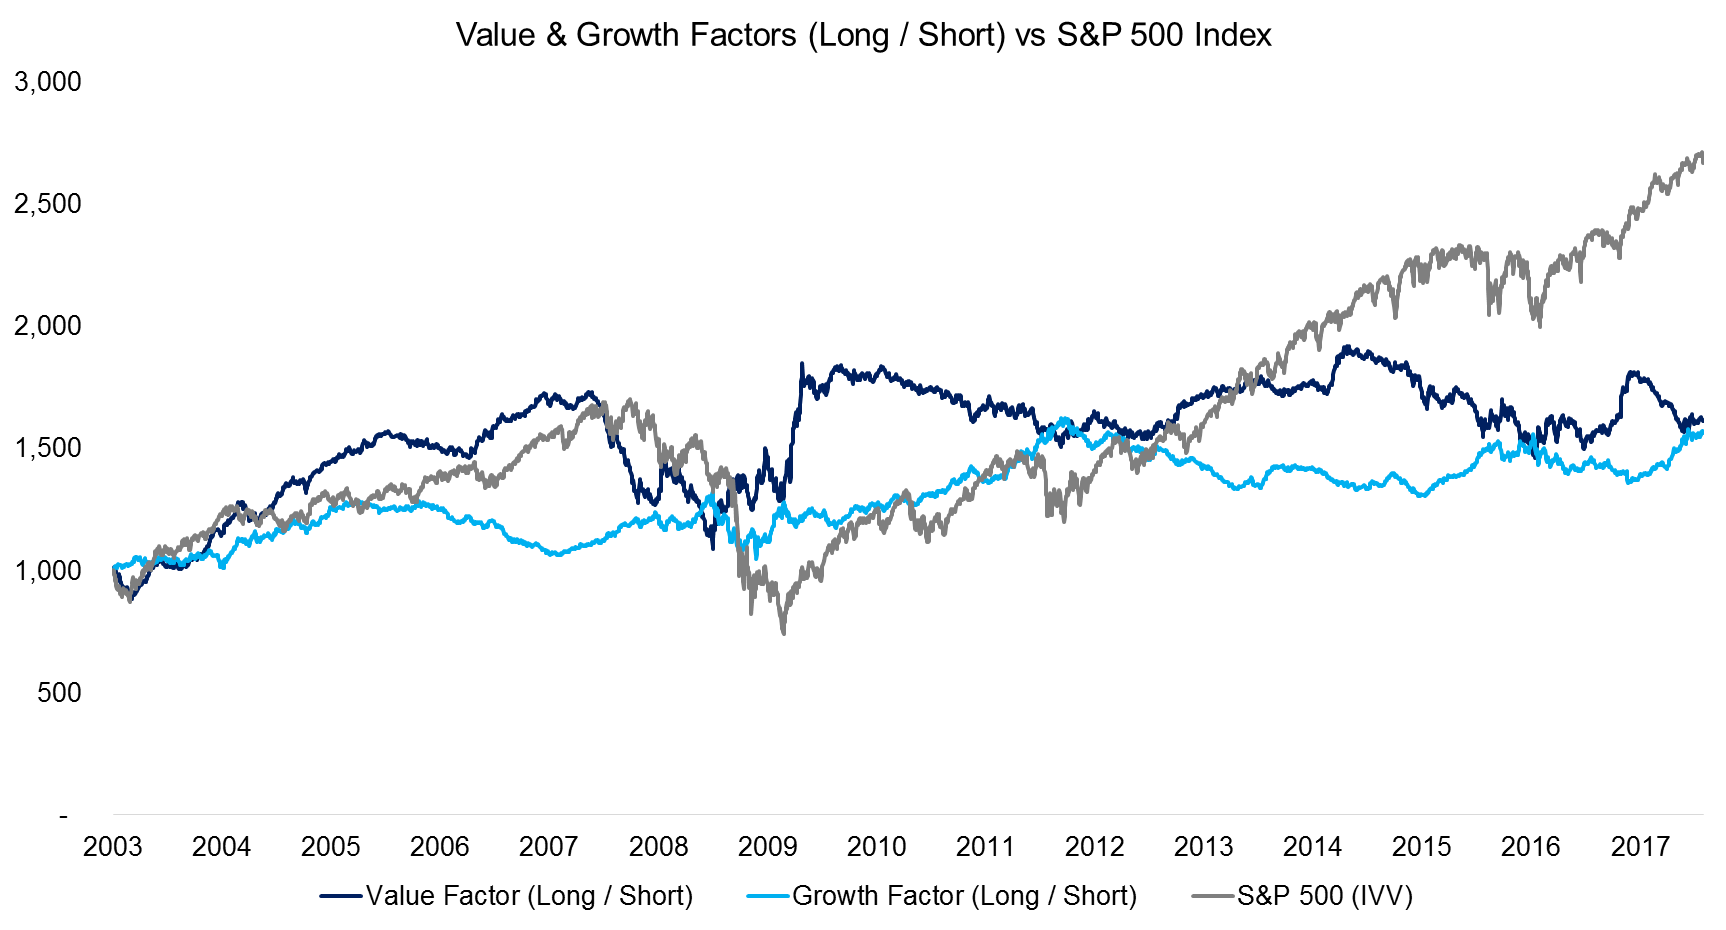 Value & Growth Factors (Long Short) vs S&P 500 Index